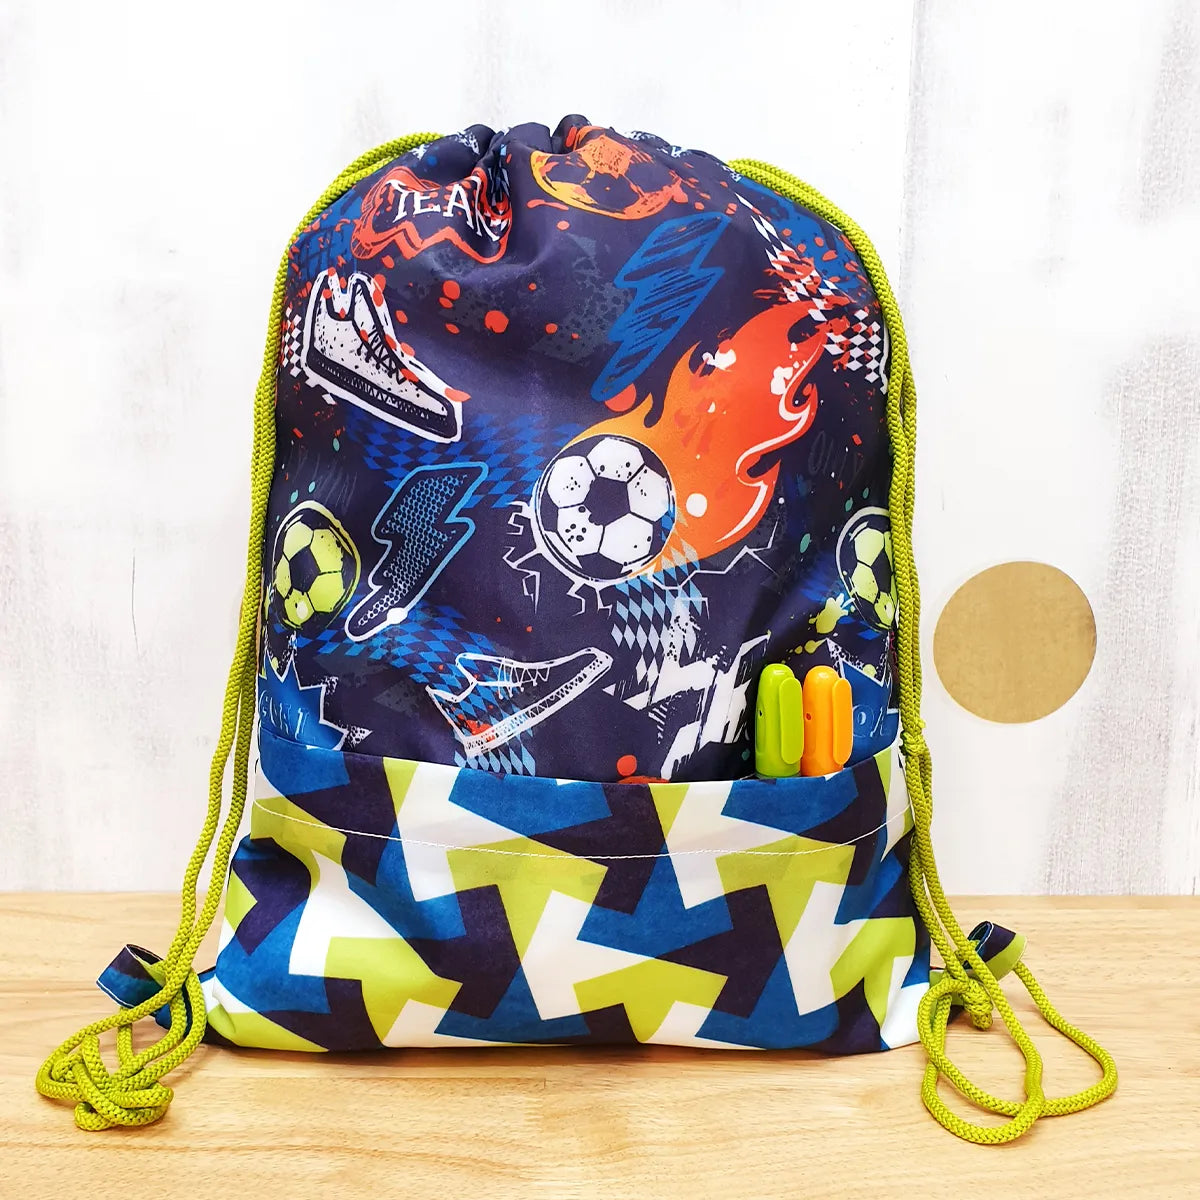 Soccer Drawstring Bag - Front View